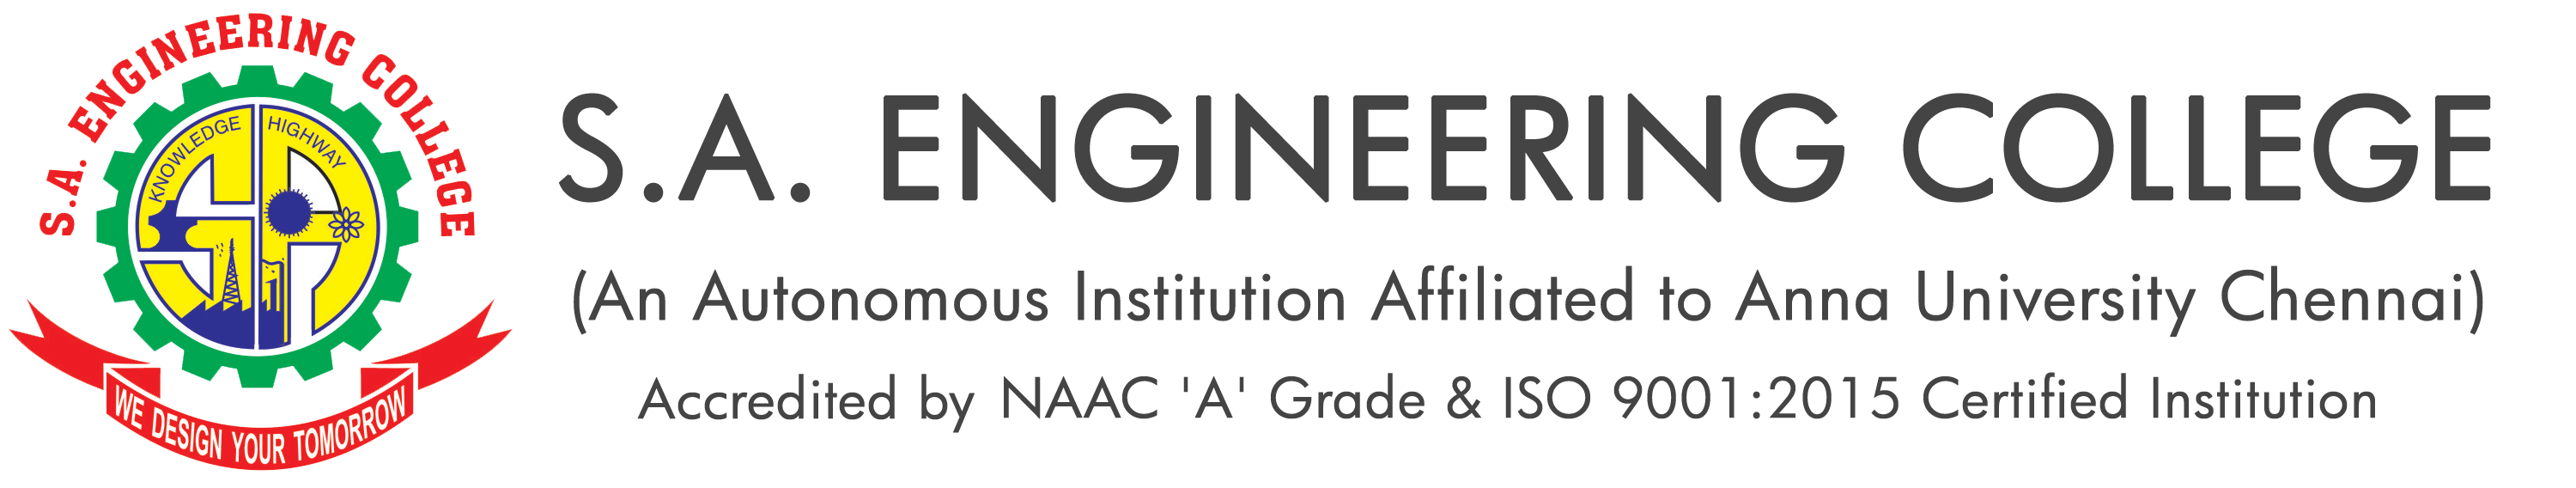 SAEC. | S.A. Engineering College (Autonomous)